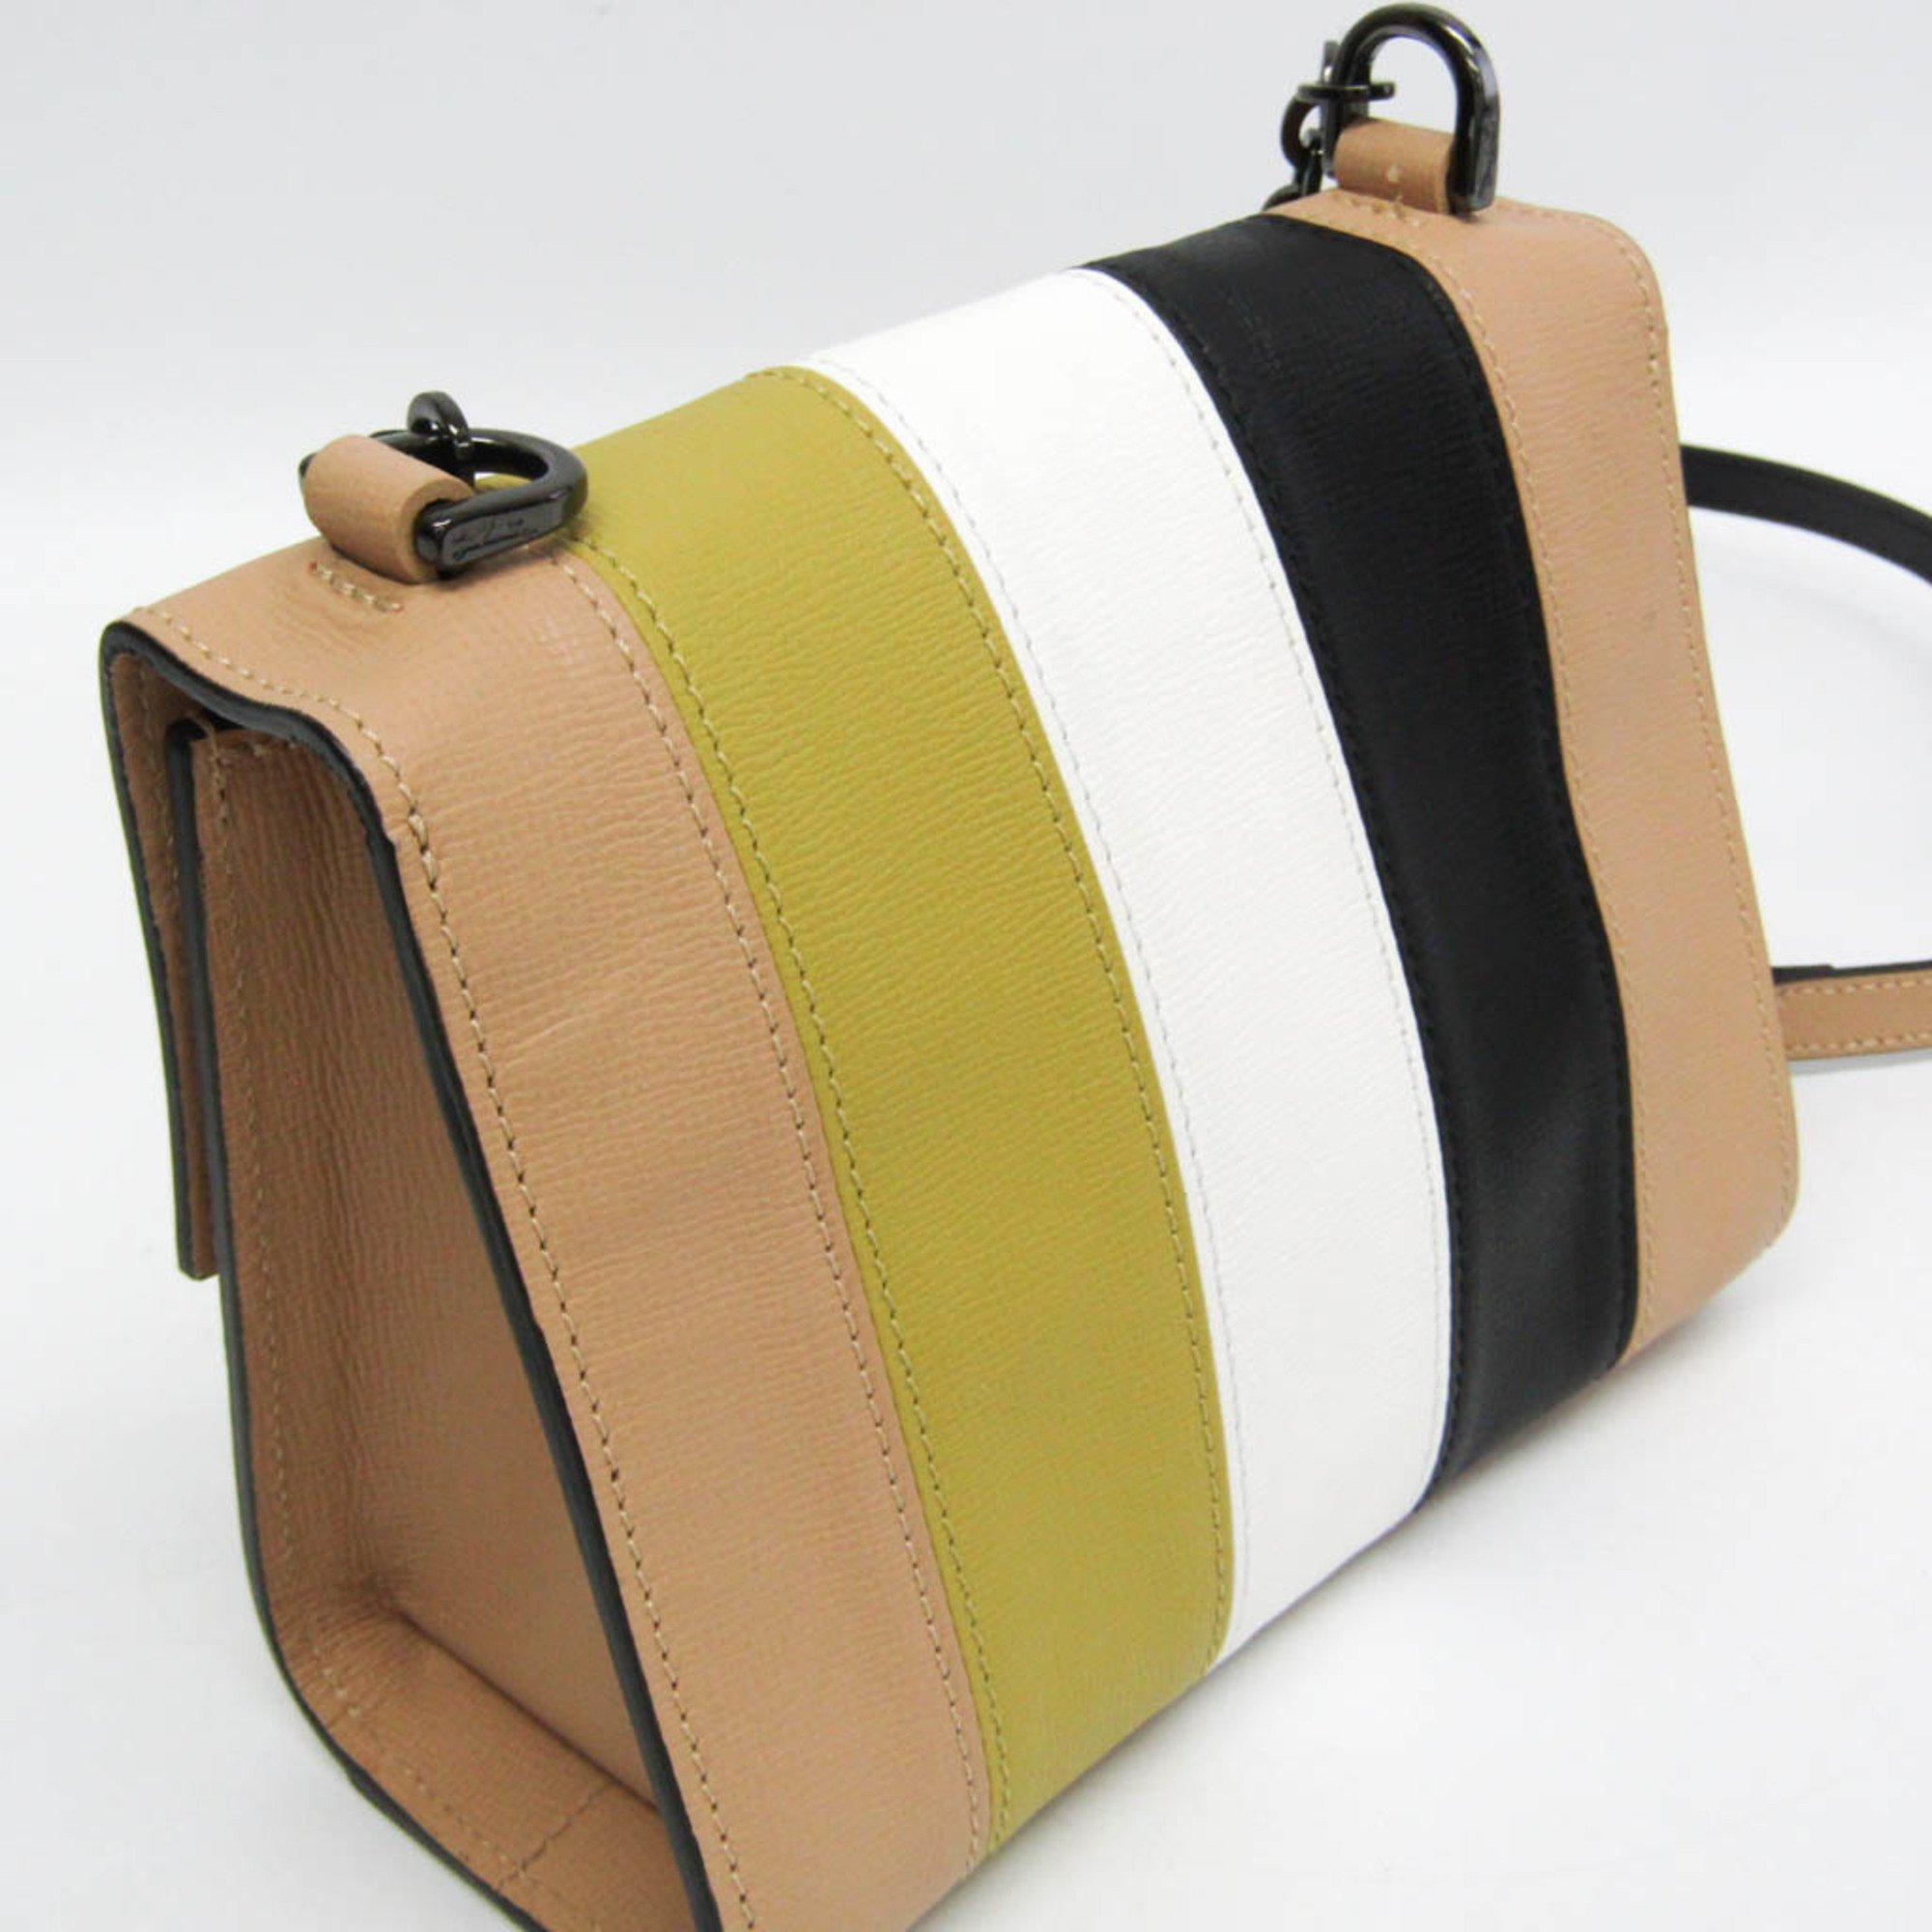 Longchamp 1314906 016 Women's Leather Shoulder Bag Beige,Black,Mustard,White